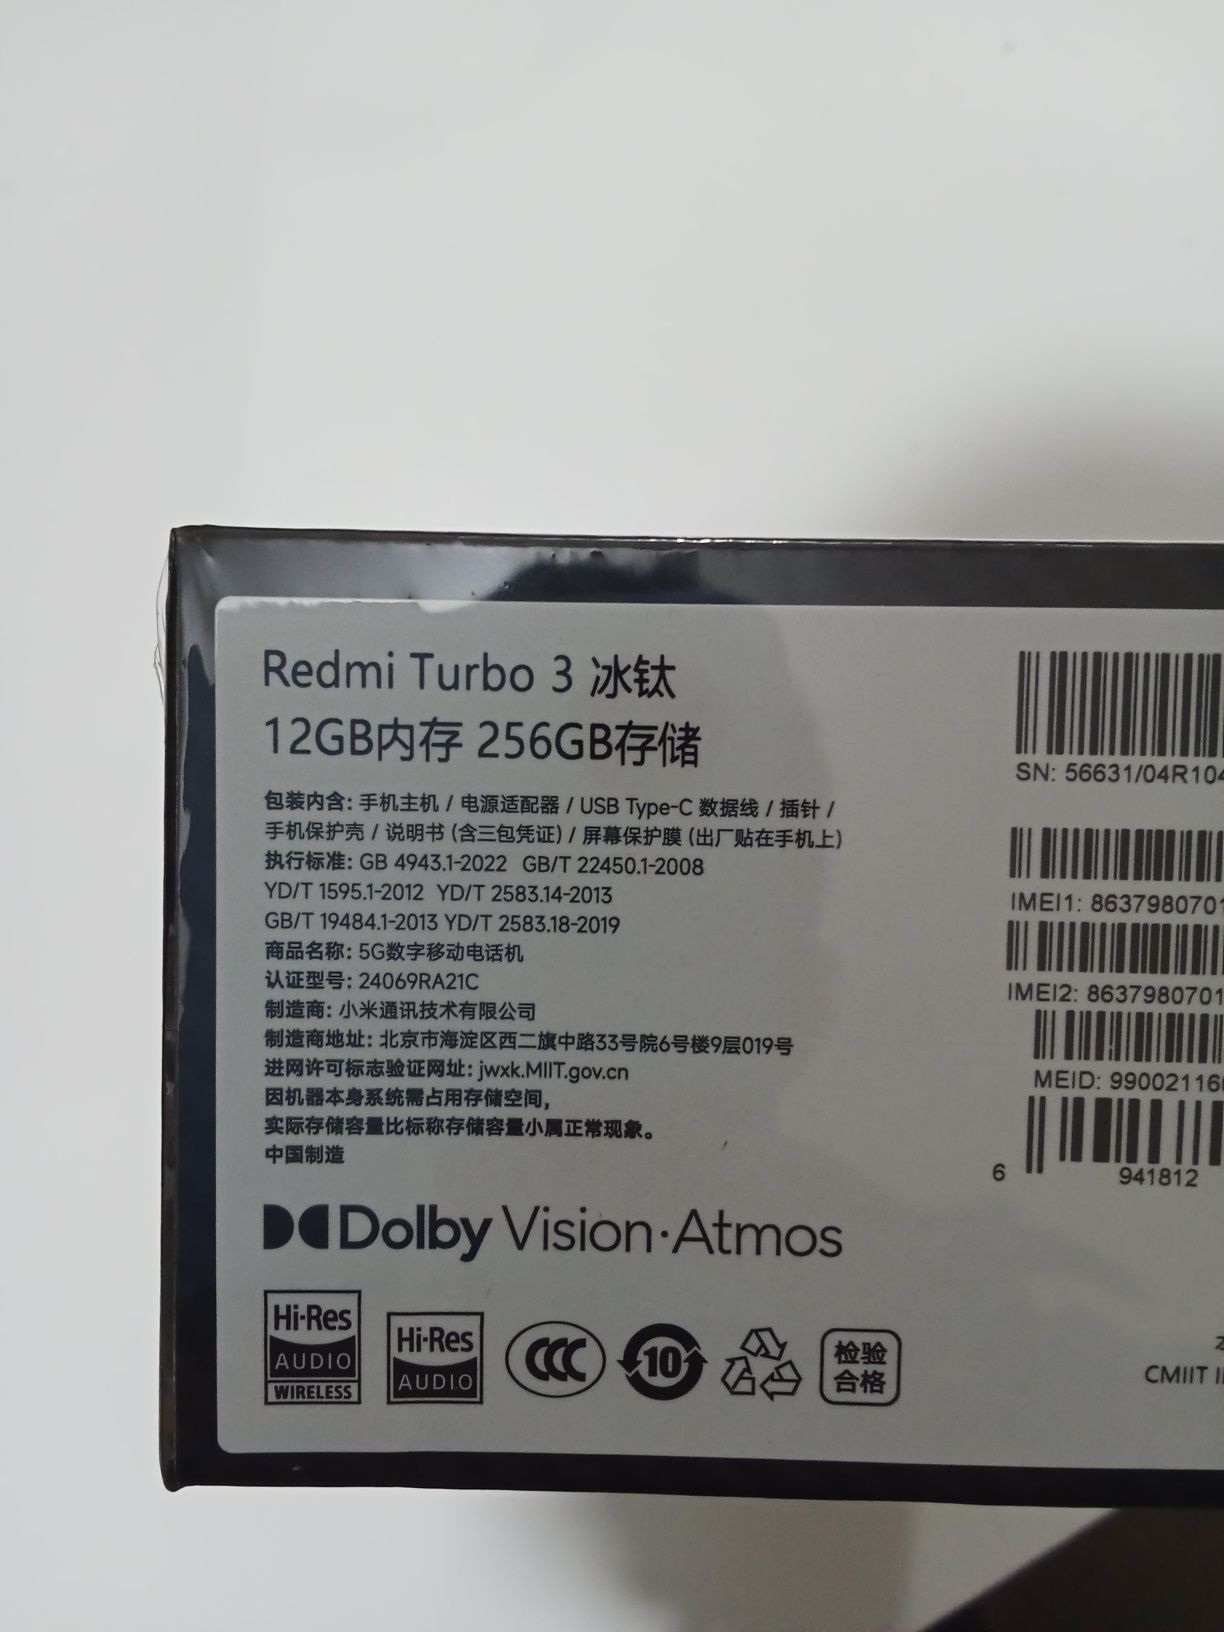 Redmi turbo 3 12/256 gb gold oq aralash